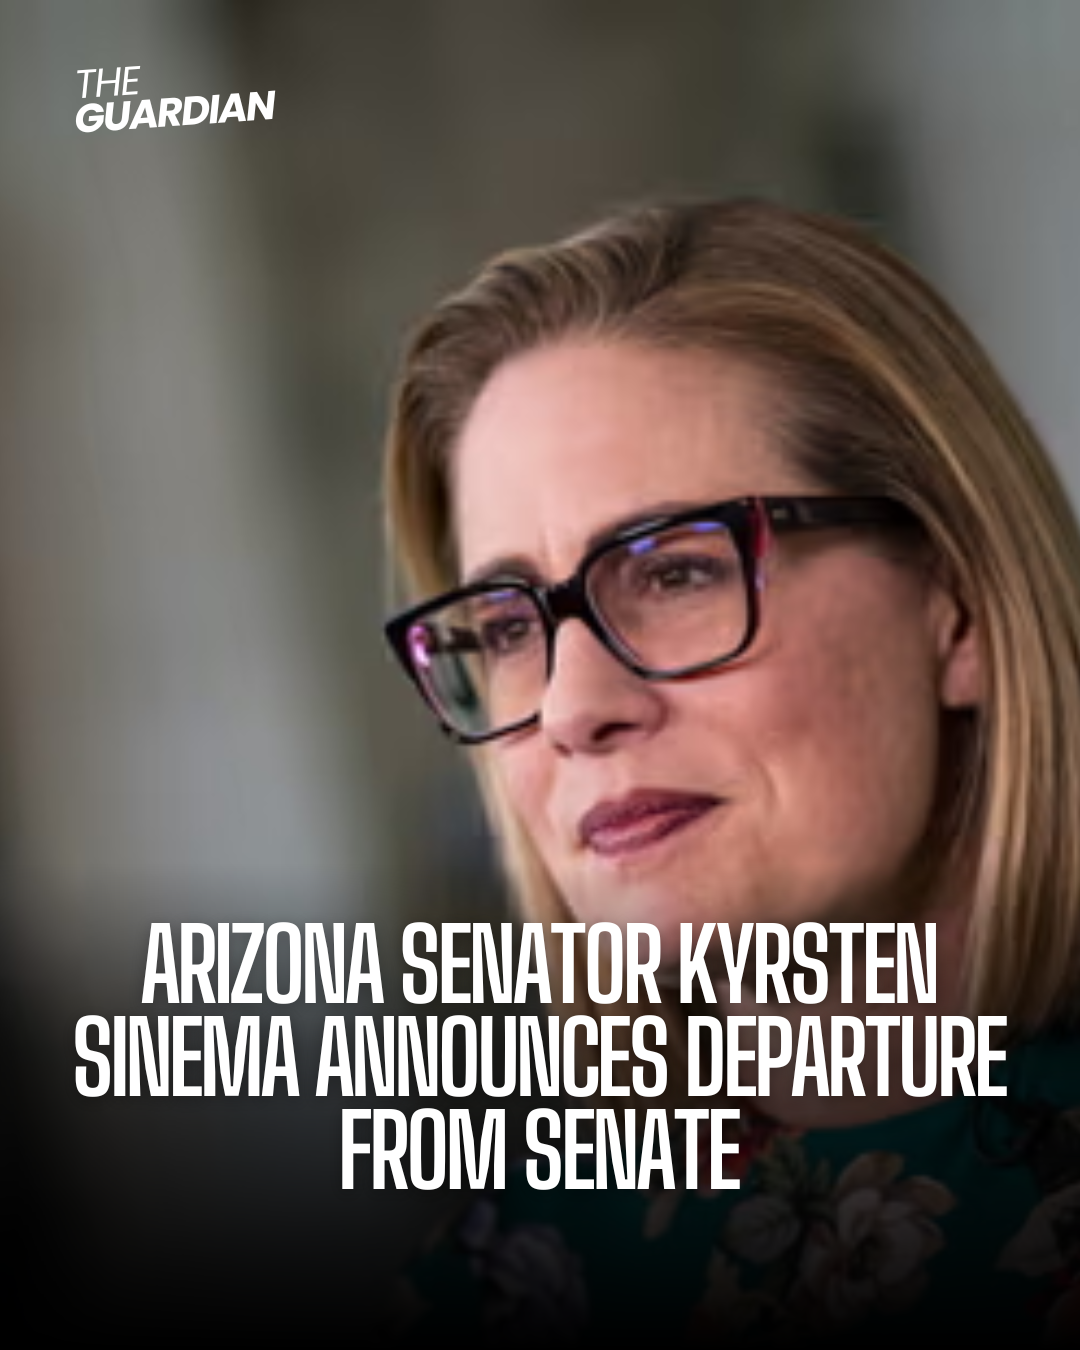 Arizona Senator Kyrsten Sinema announced that she would not seek reelection, leaving the Senate after one term.